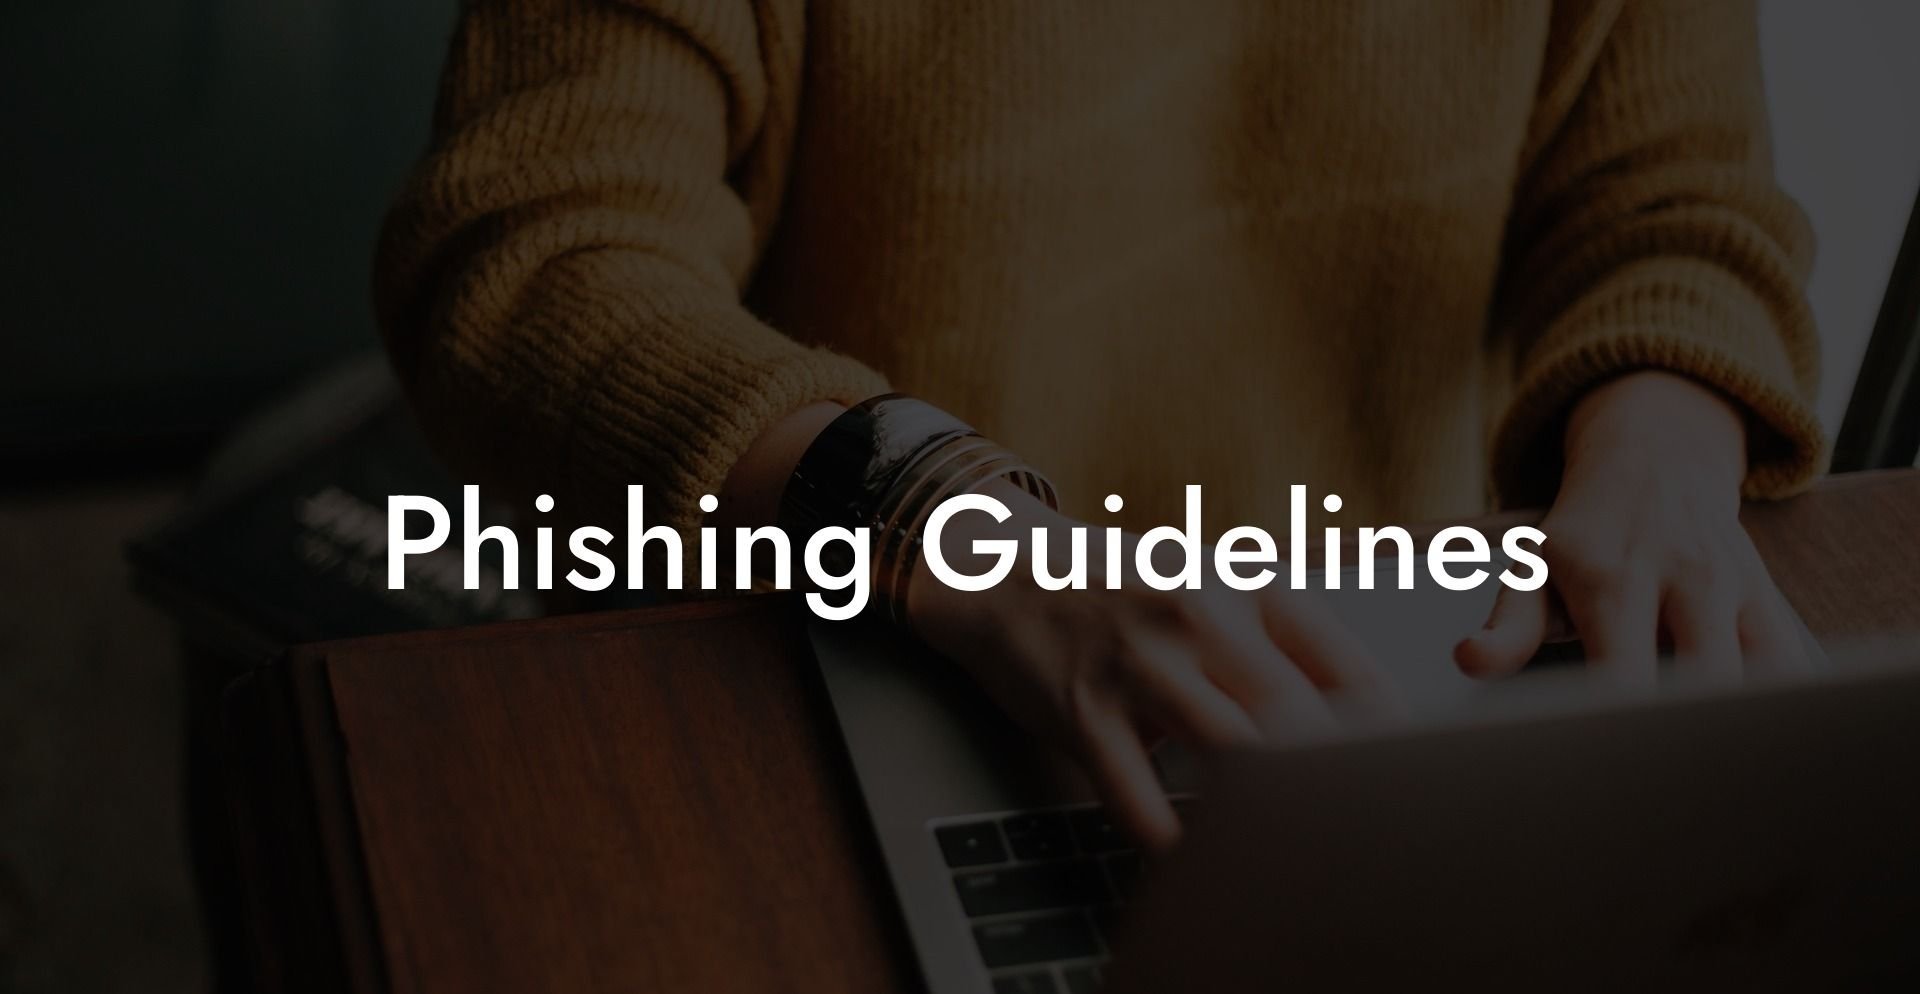 Phishing Guidelines